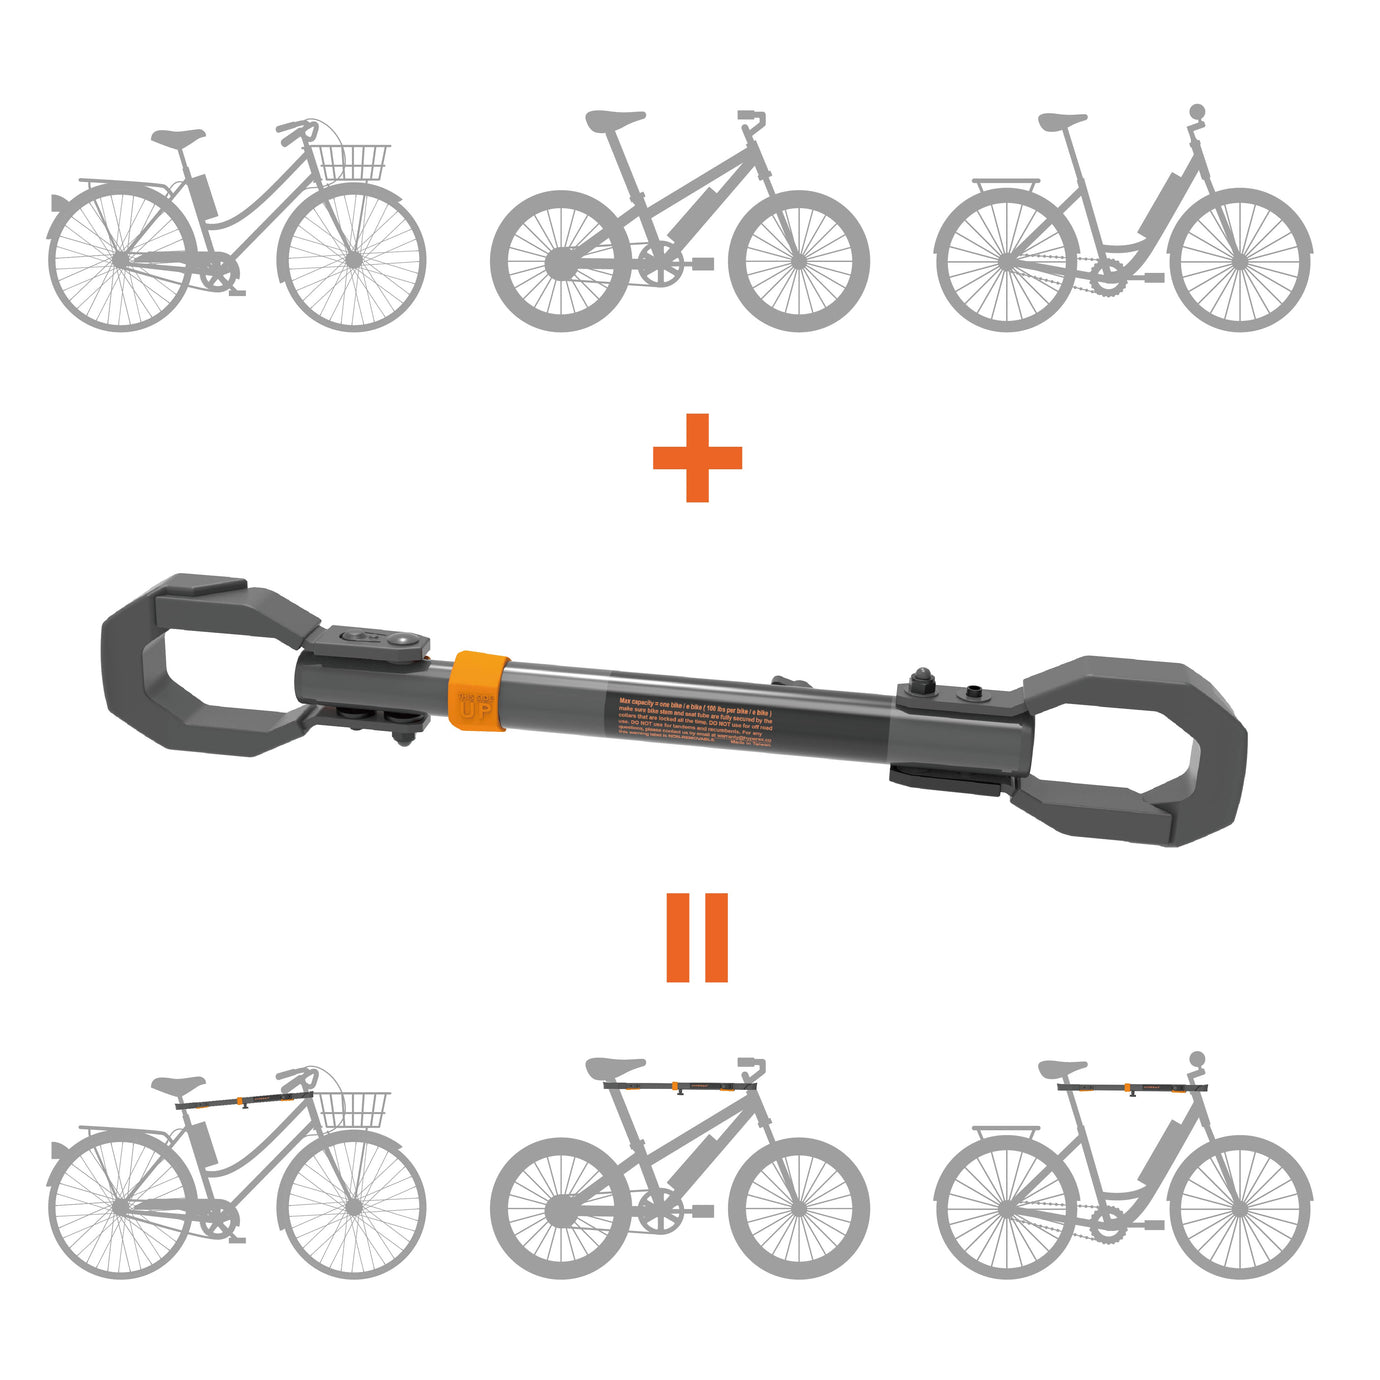 Step-Thru E Bike Adapter Series